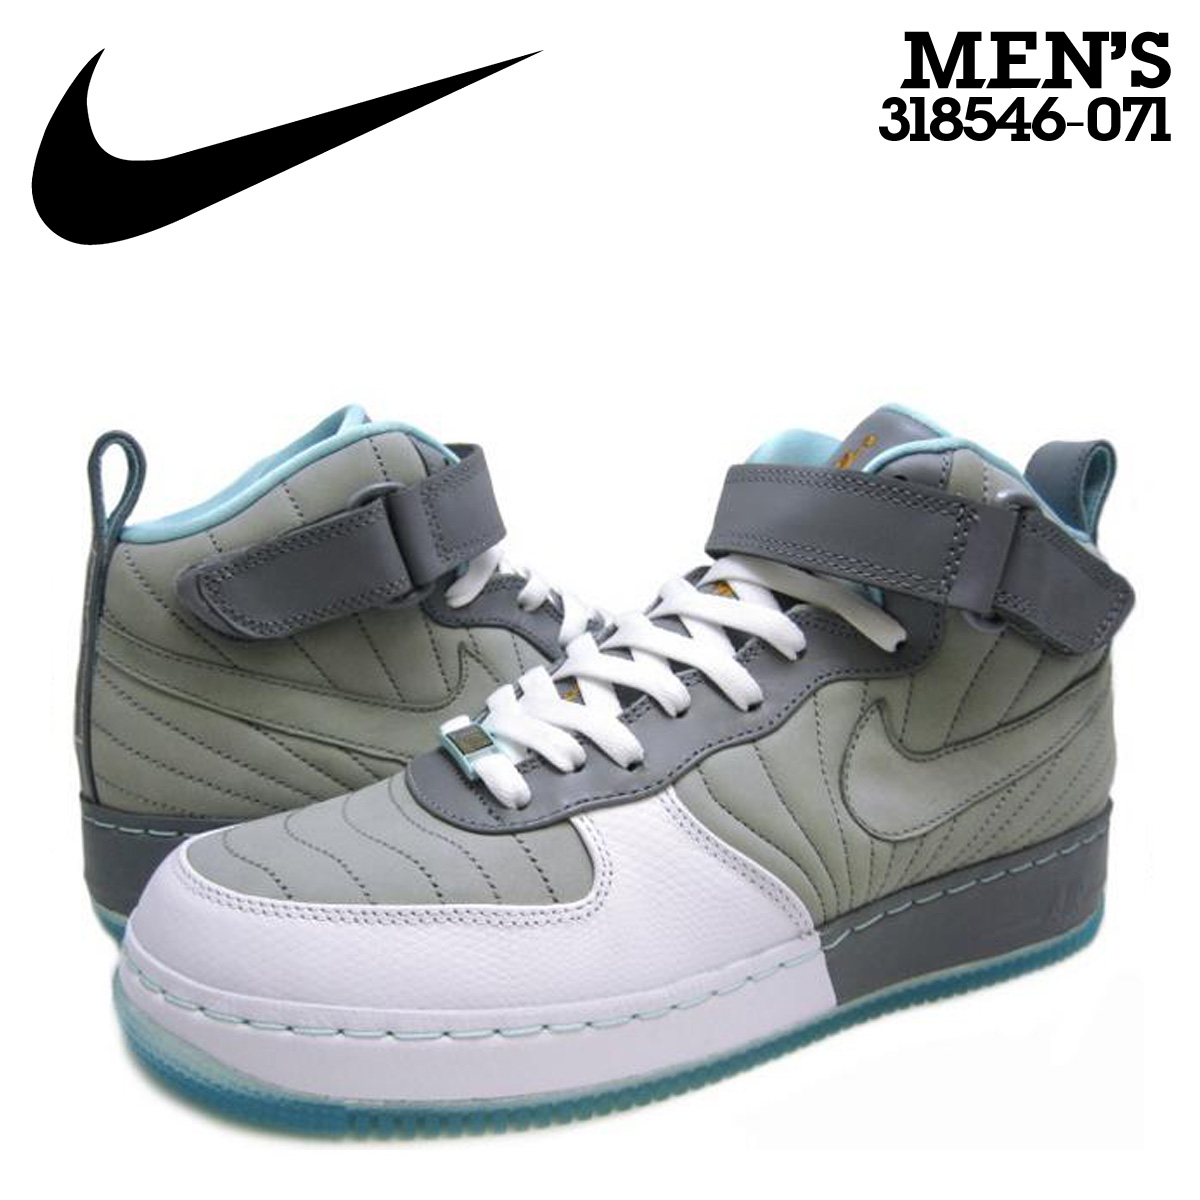 ALLSPORTS: NIKE Nike Air Jordan 